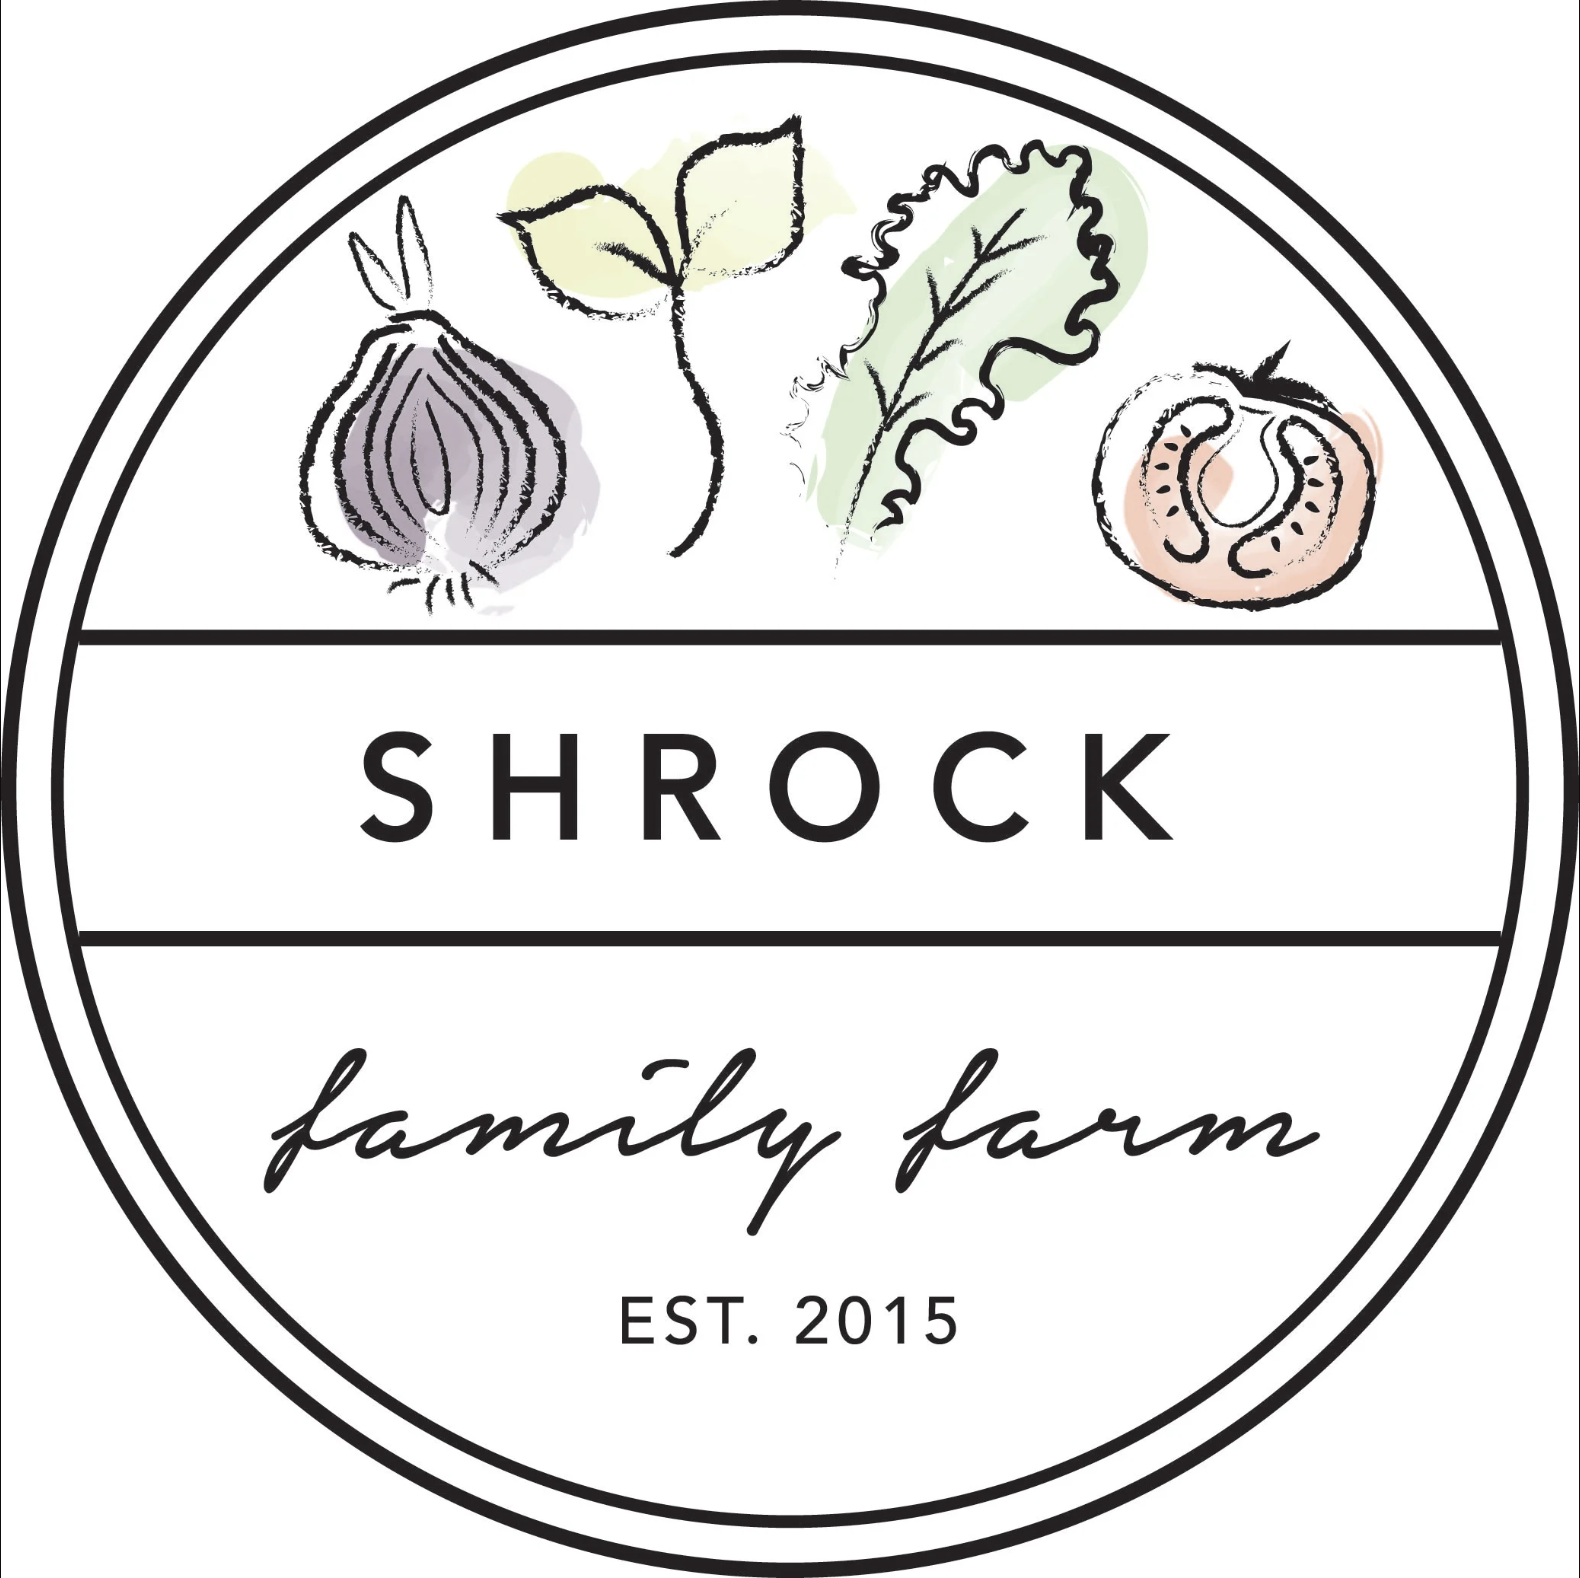 Shrock Family Farm